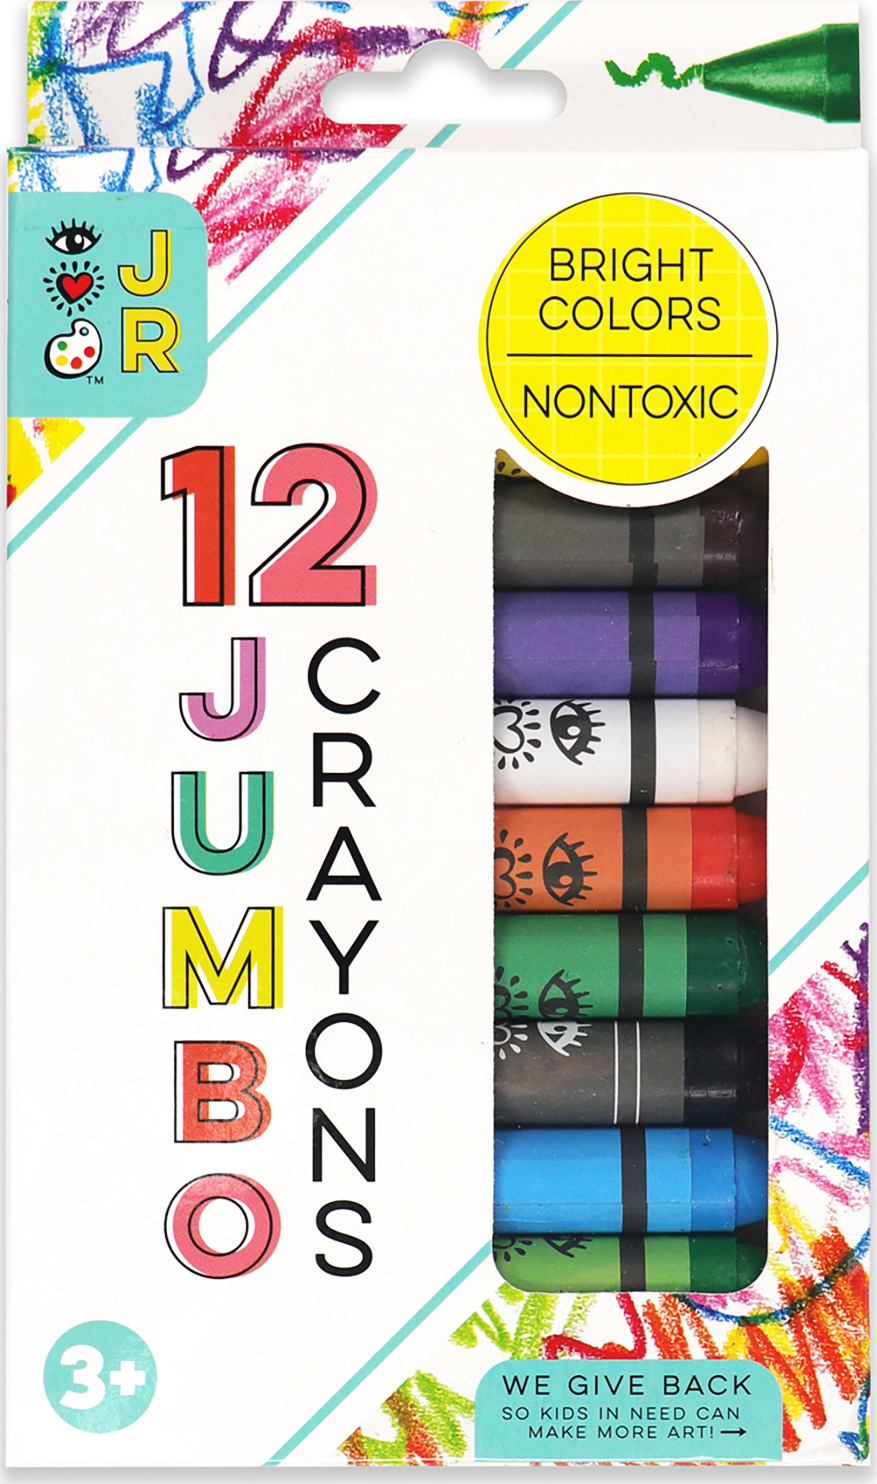 JR 12 Jumbo Crayons